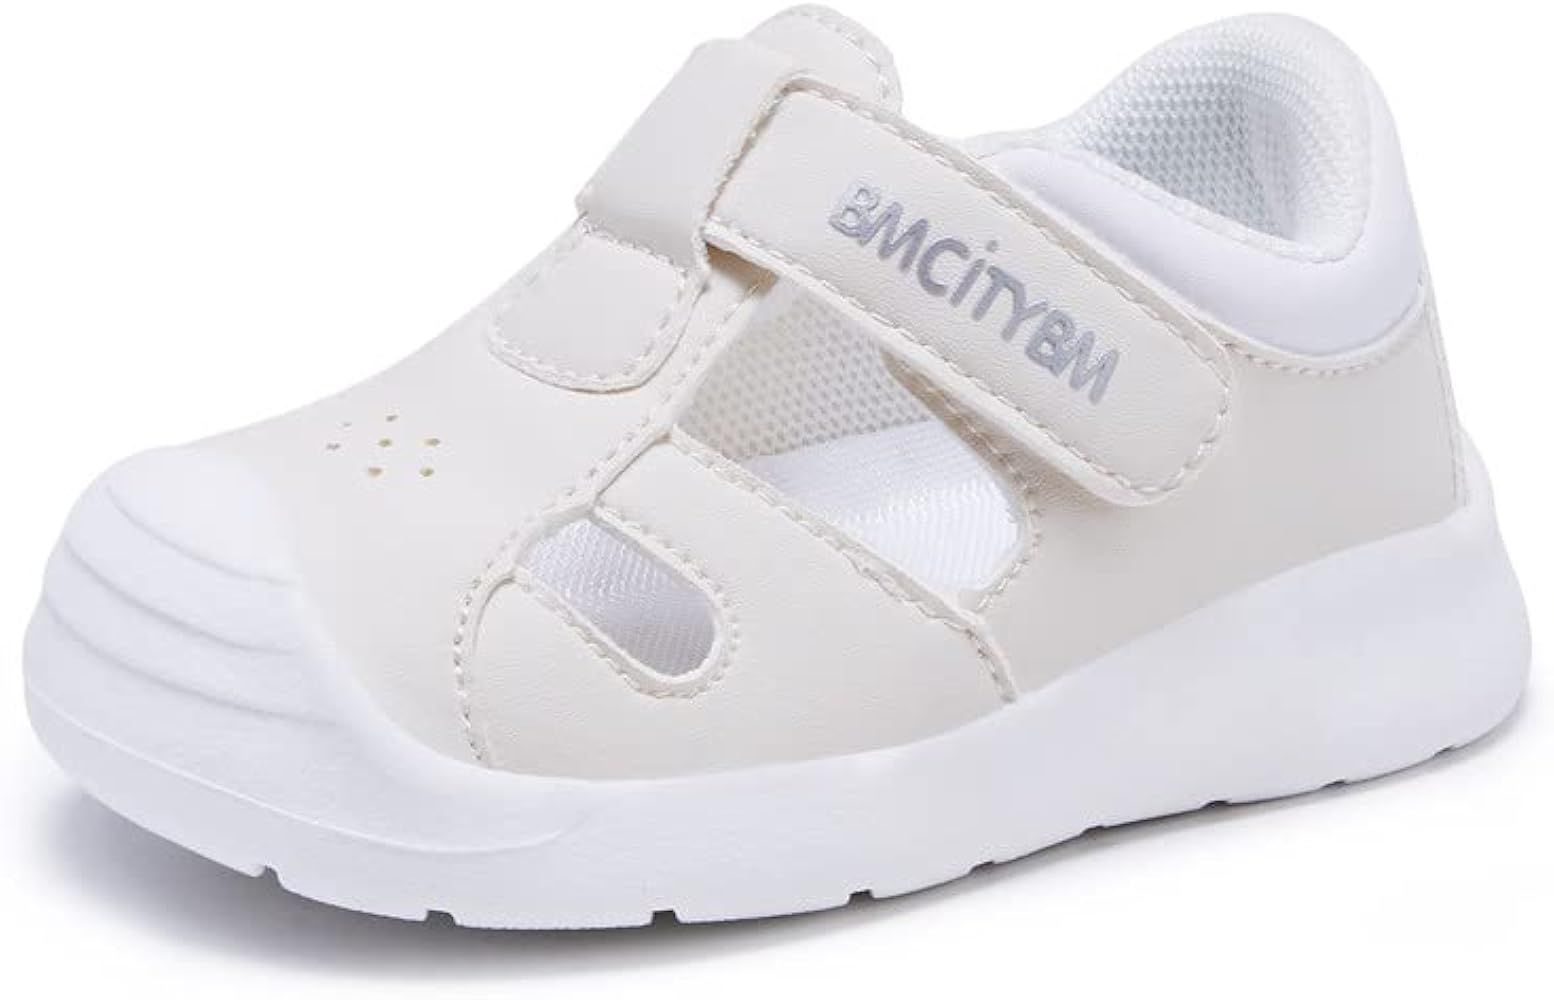 BMCiTYBM Baby Girls Boys Sandals Infant Toddler Summer Water Beach Shoes Non-Slip | Amazon (US)